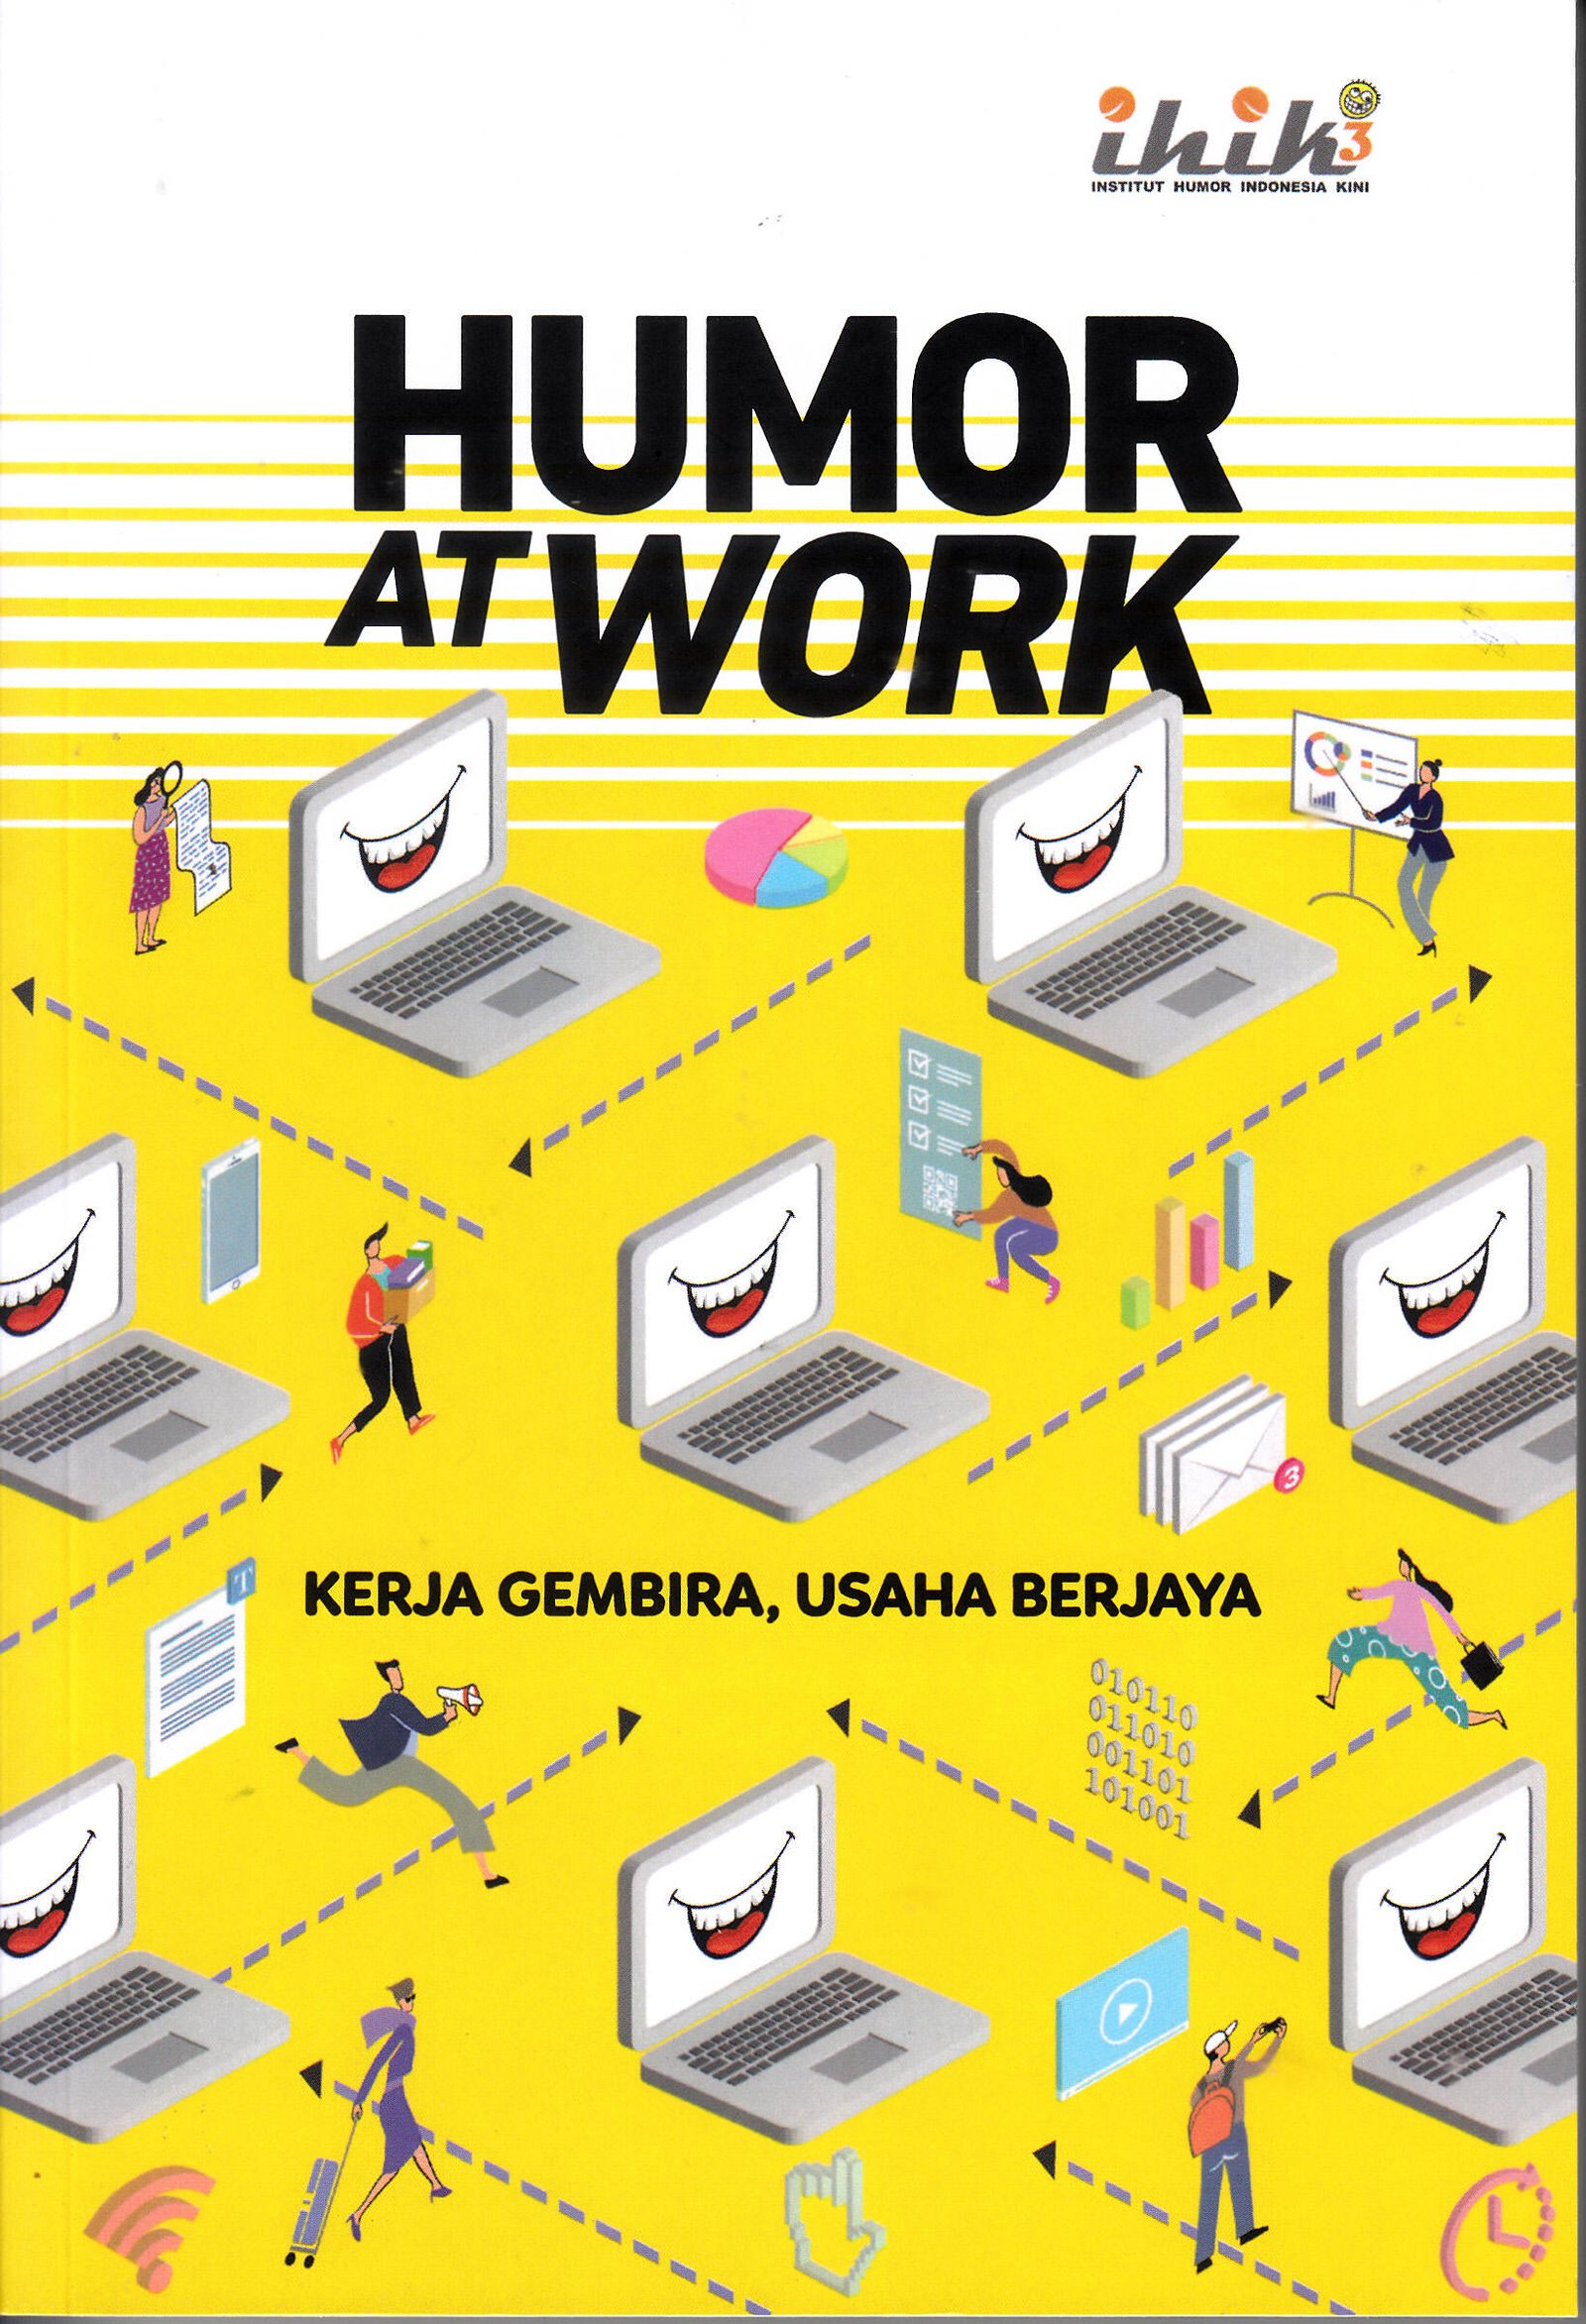 Humor at work: kerja gembira, usaha berjaya